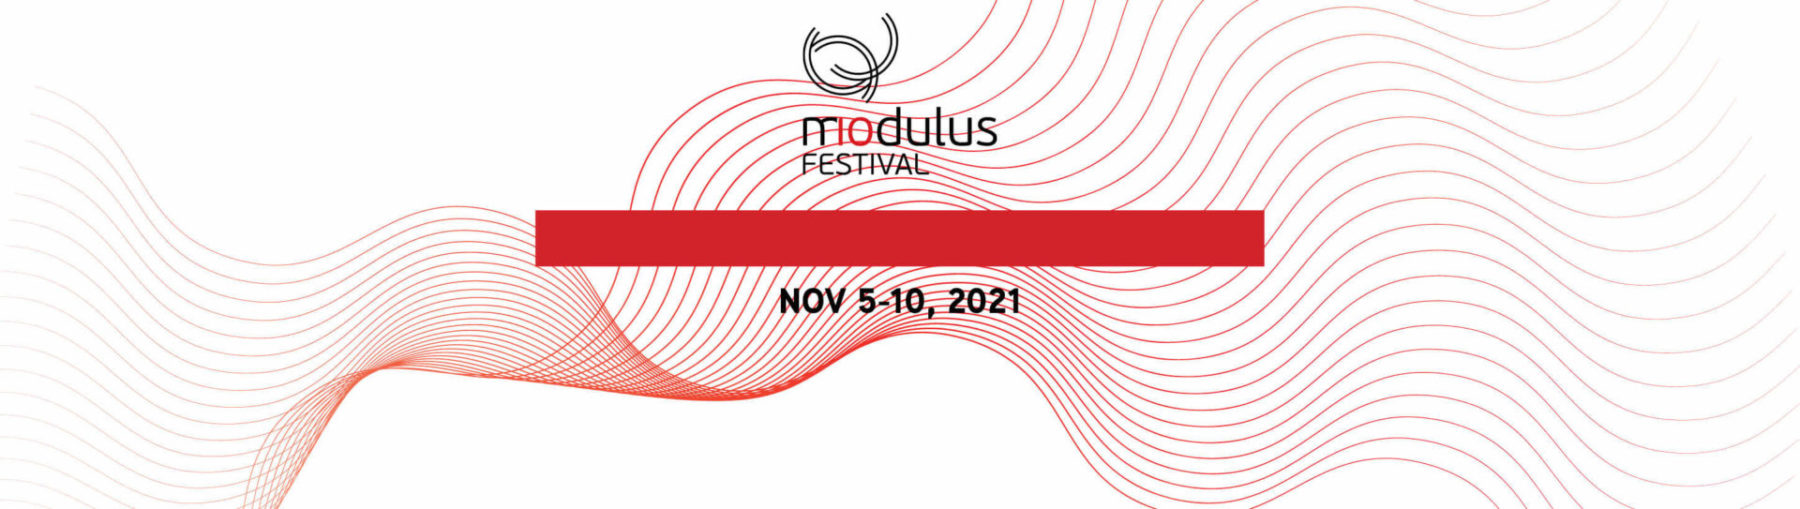 Modulus 10 Festival Website Banner Events